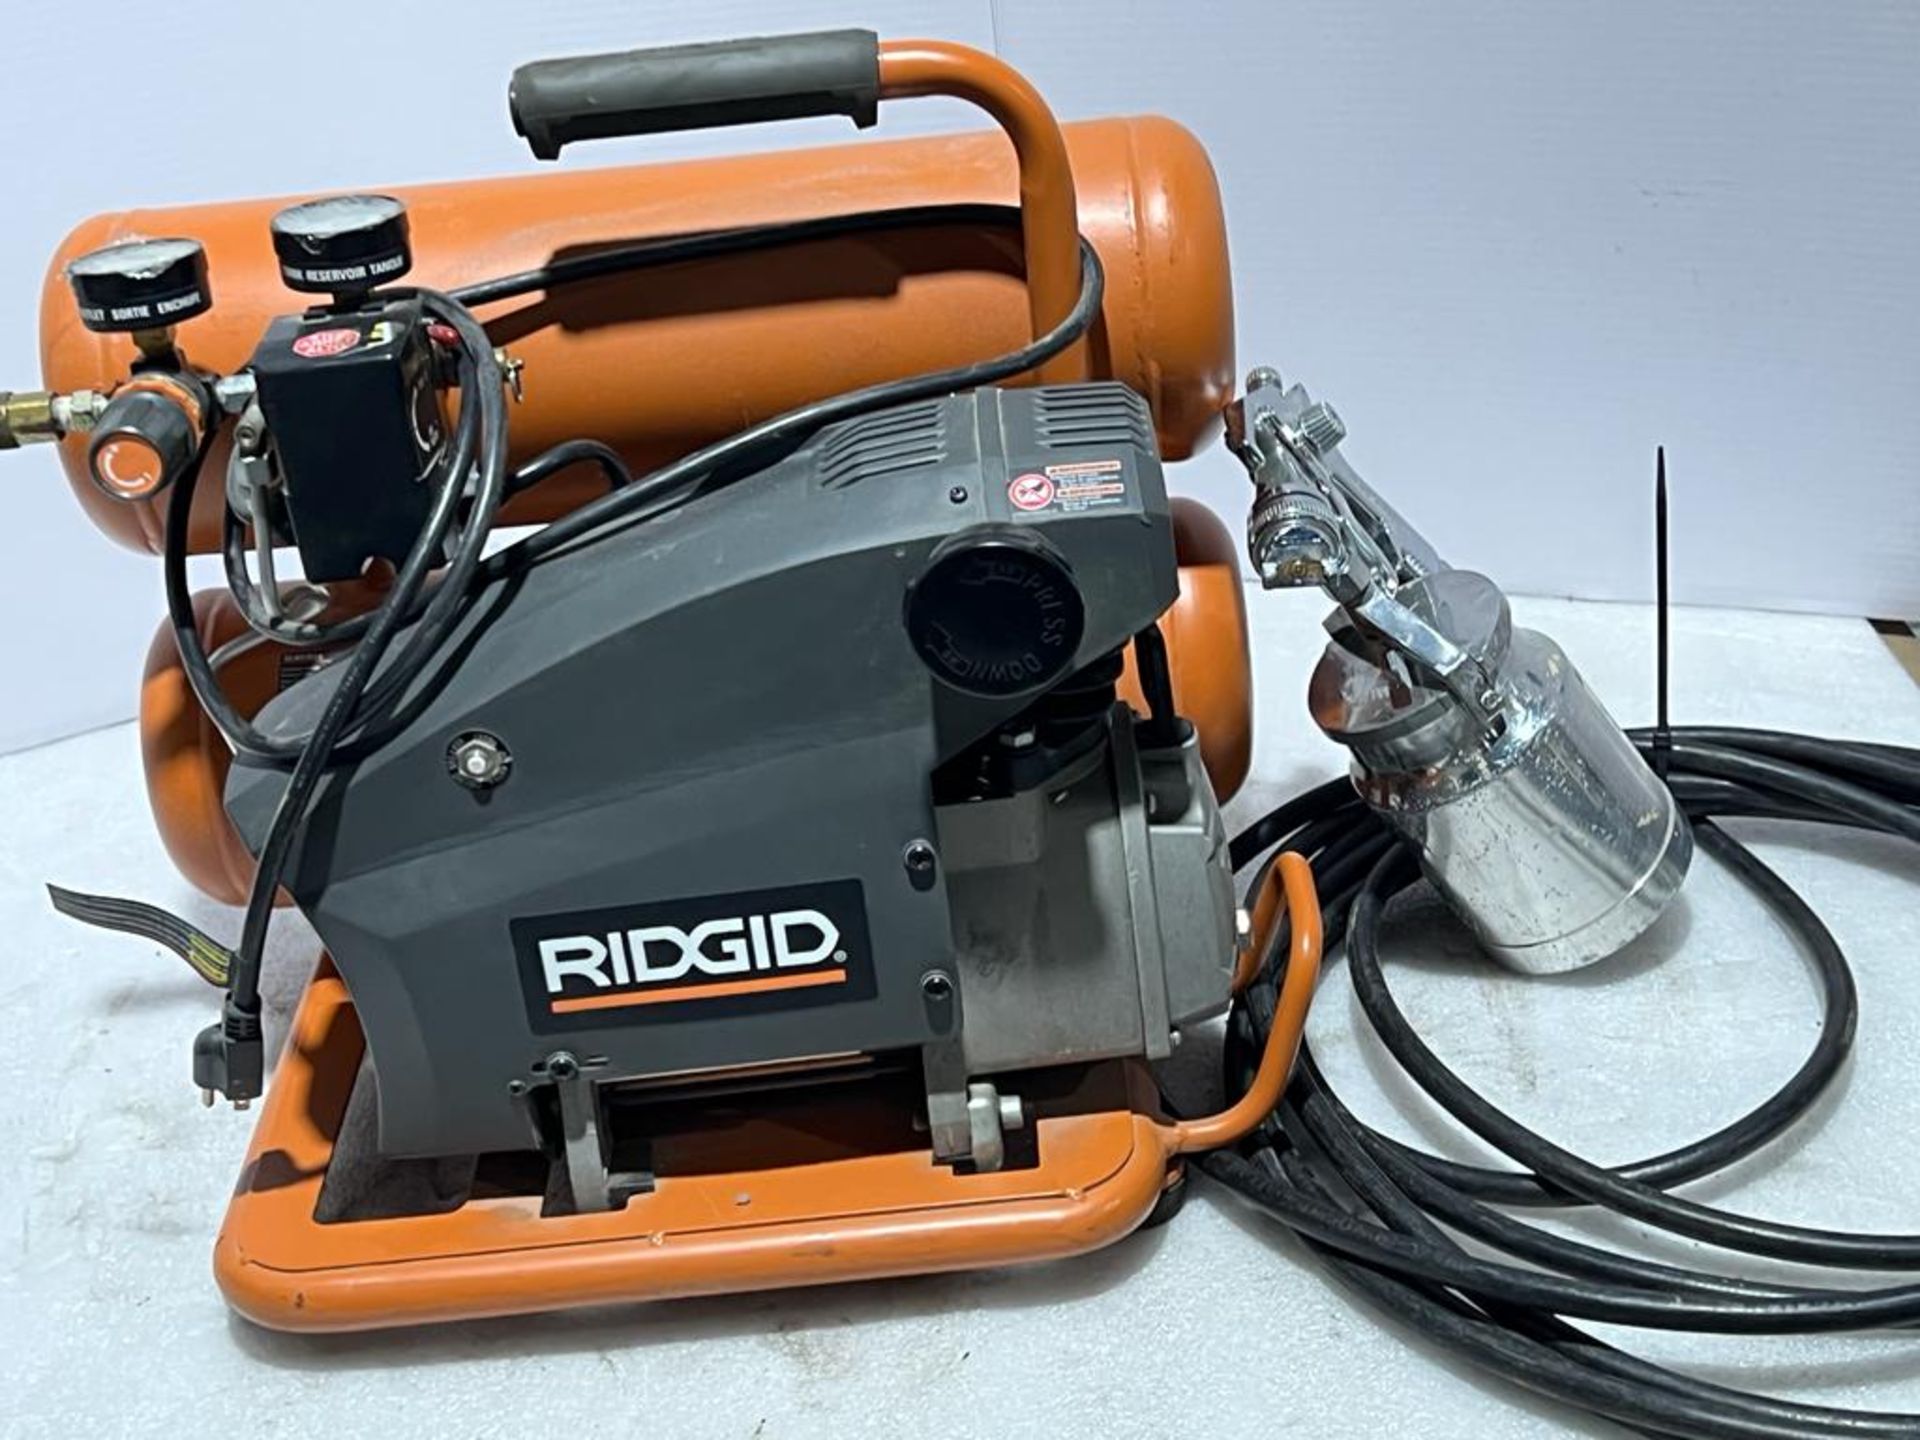 Ridgid Portable Shop Air Compressor with Pneumatic Spray Paint Gun